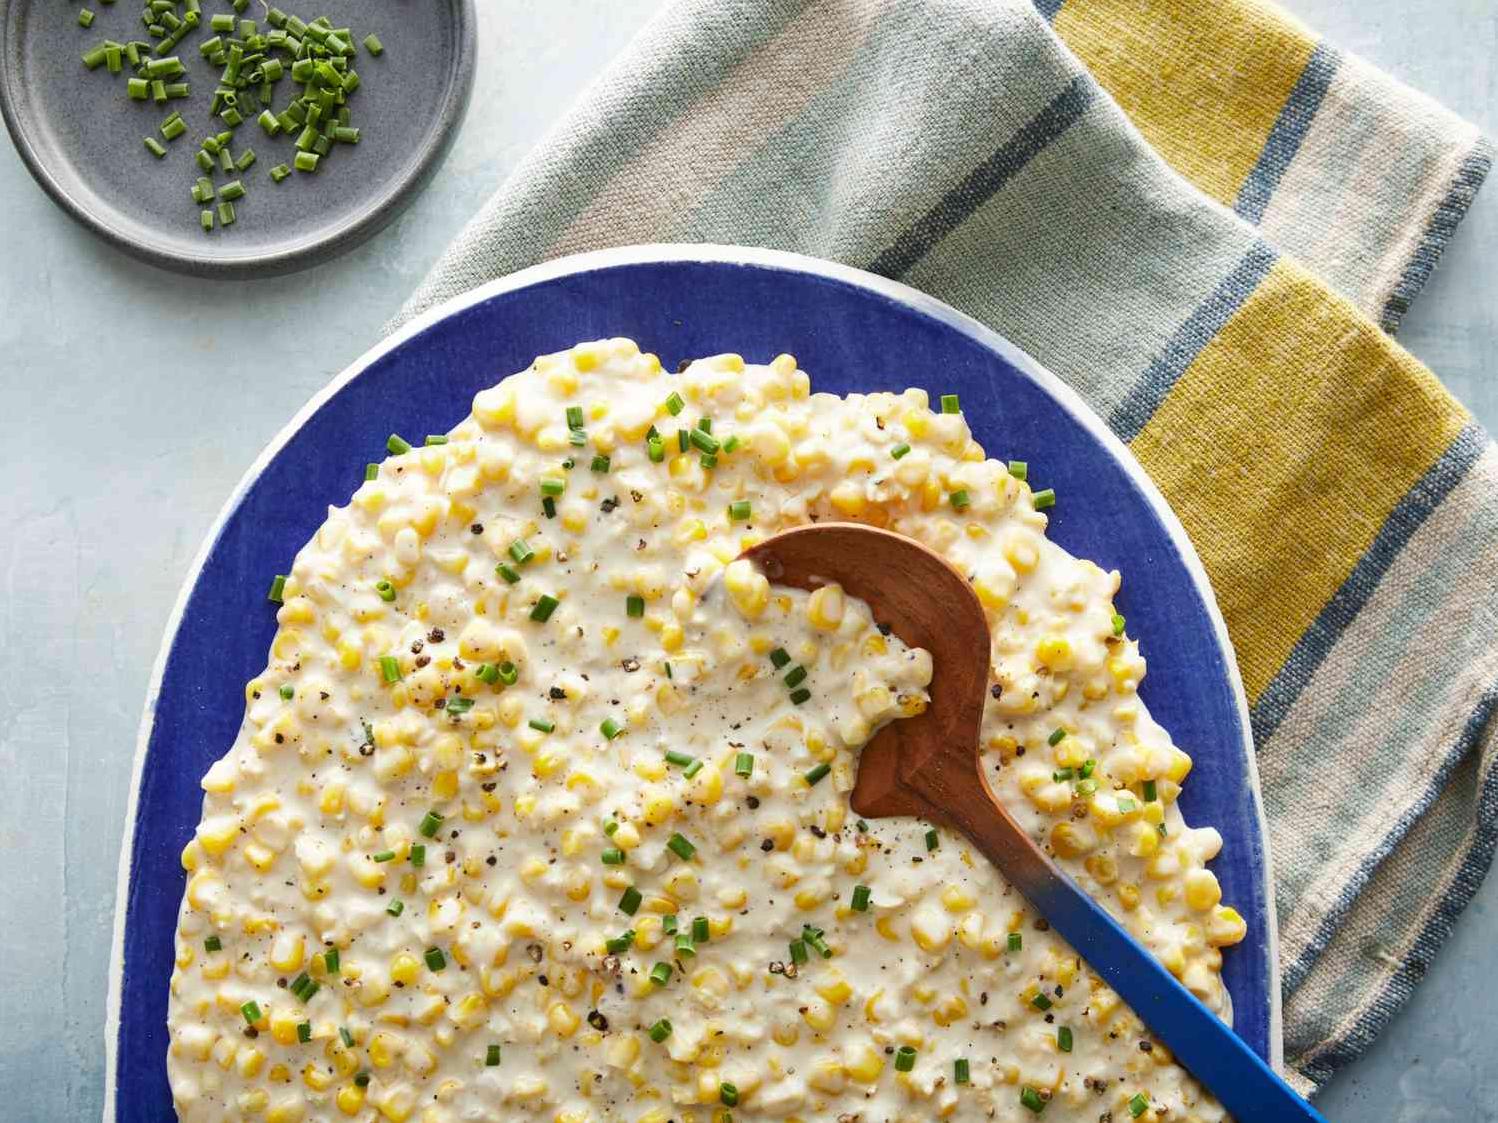  It’s corny, but we love it!